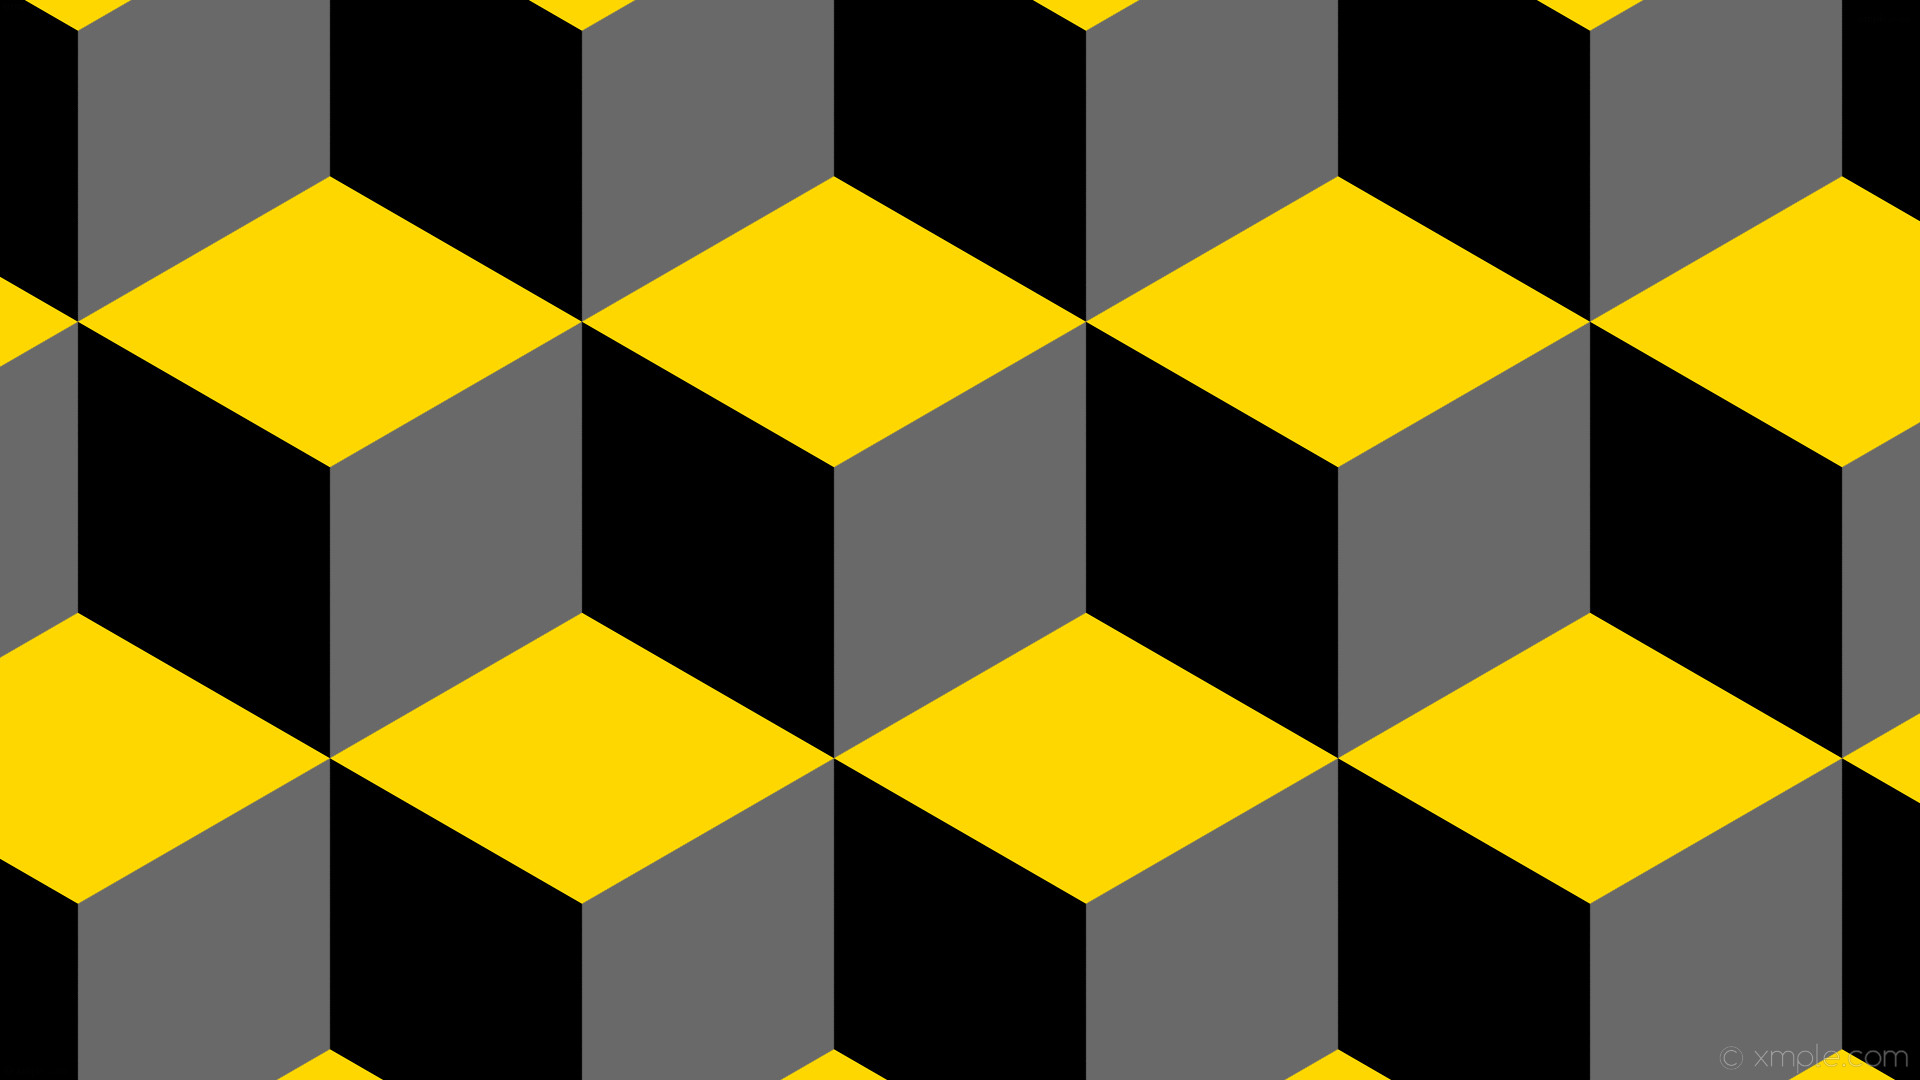 1920x1080 wallpaper black 3d cubes grey yellow dim gray gold #696969 #ffd700 #000000  60